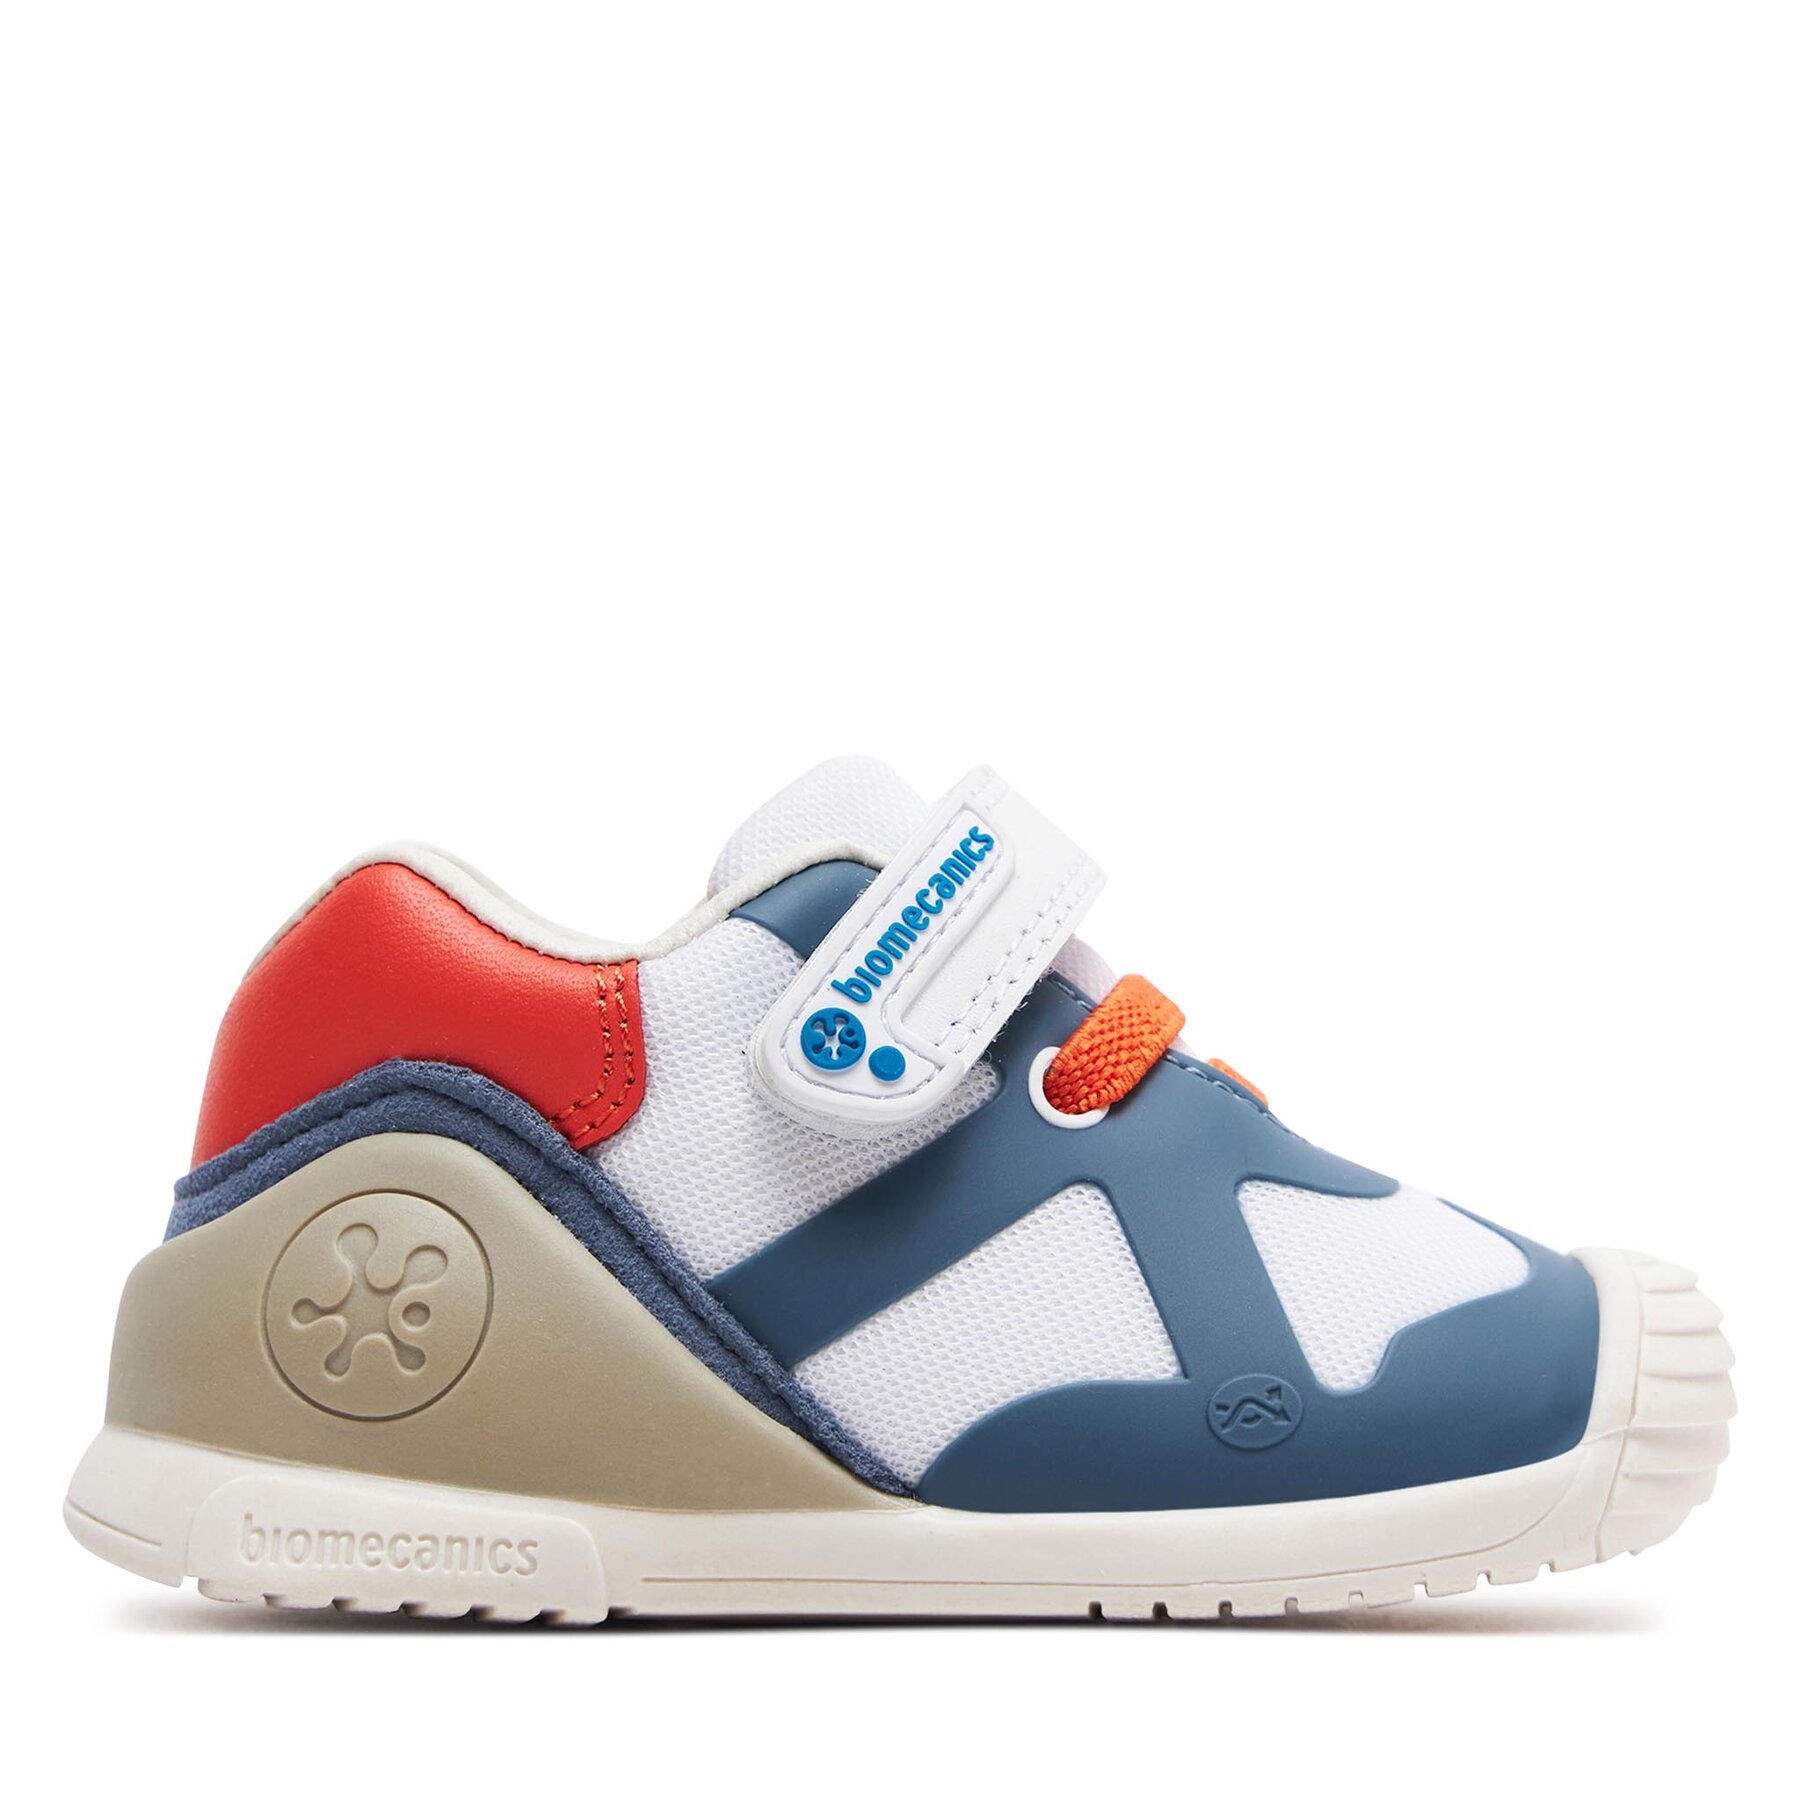 Sneakers Biomecanics 242151 A Blanco Y Naranja von Biomecanics